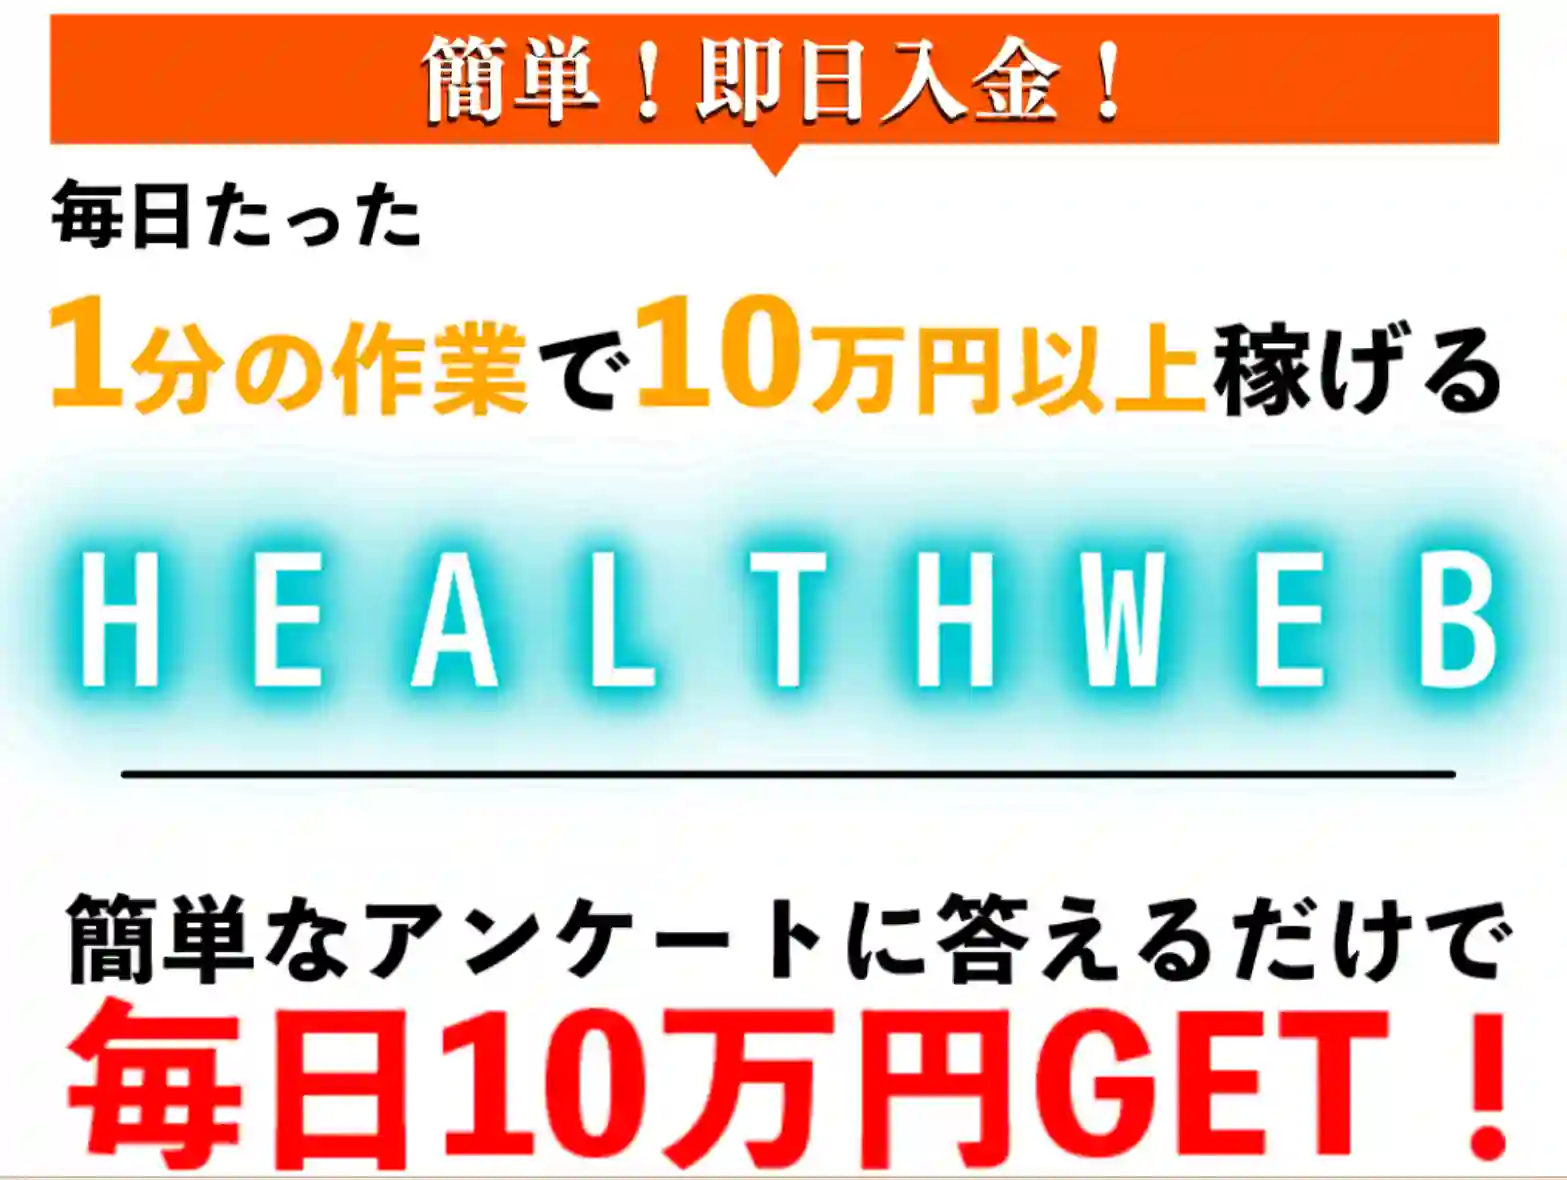 HEALTHWEB